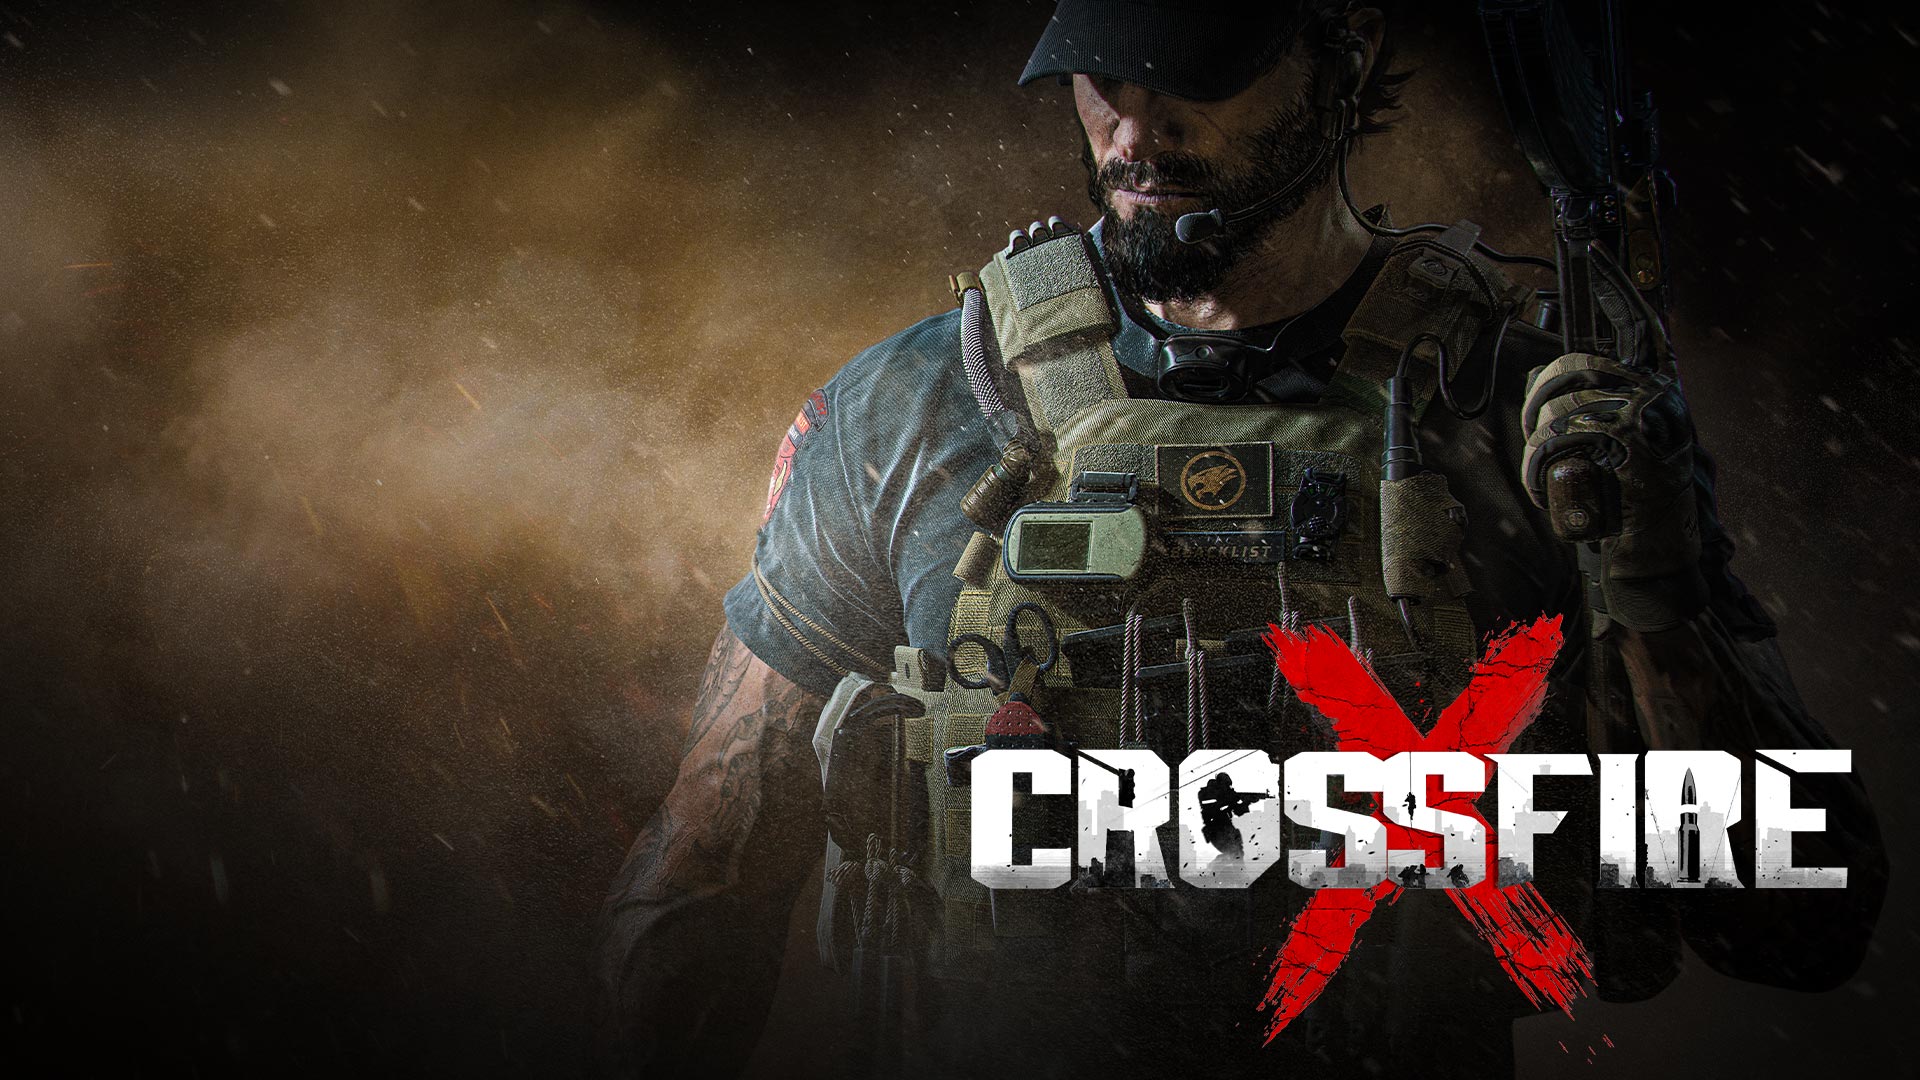 crossfire x xbox release date